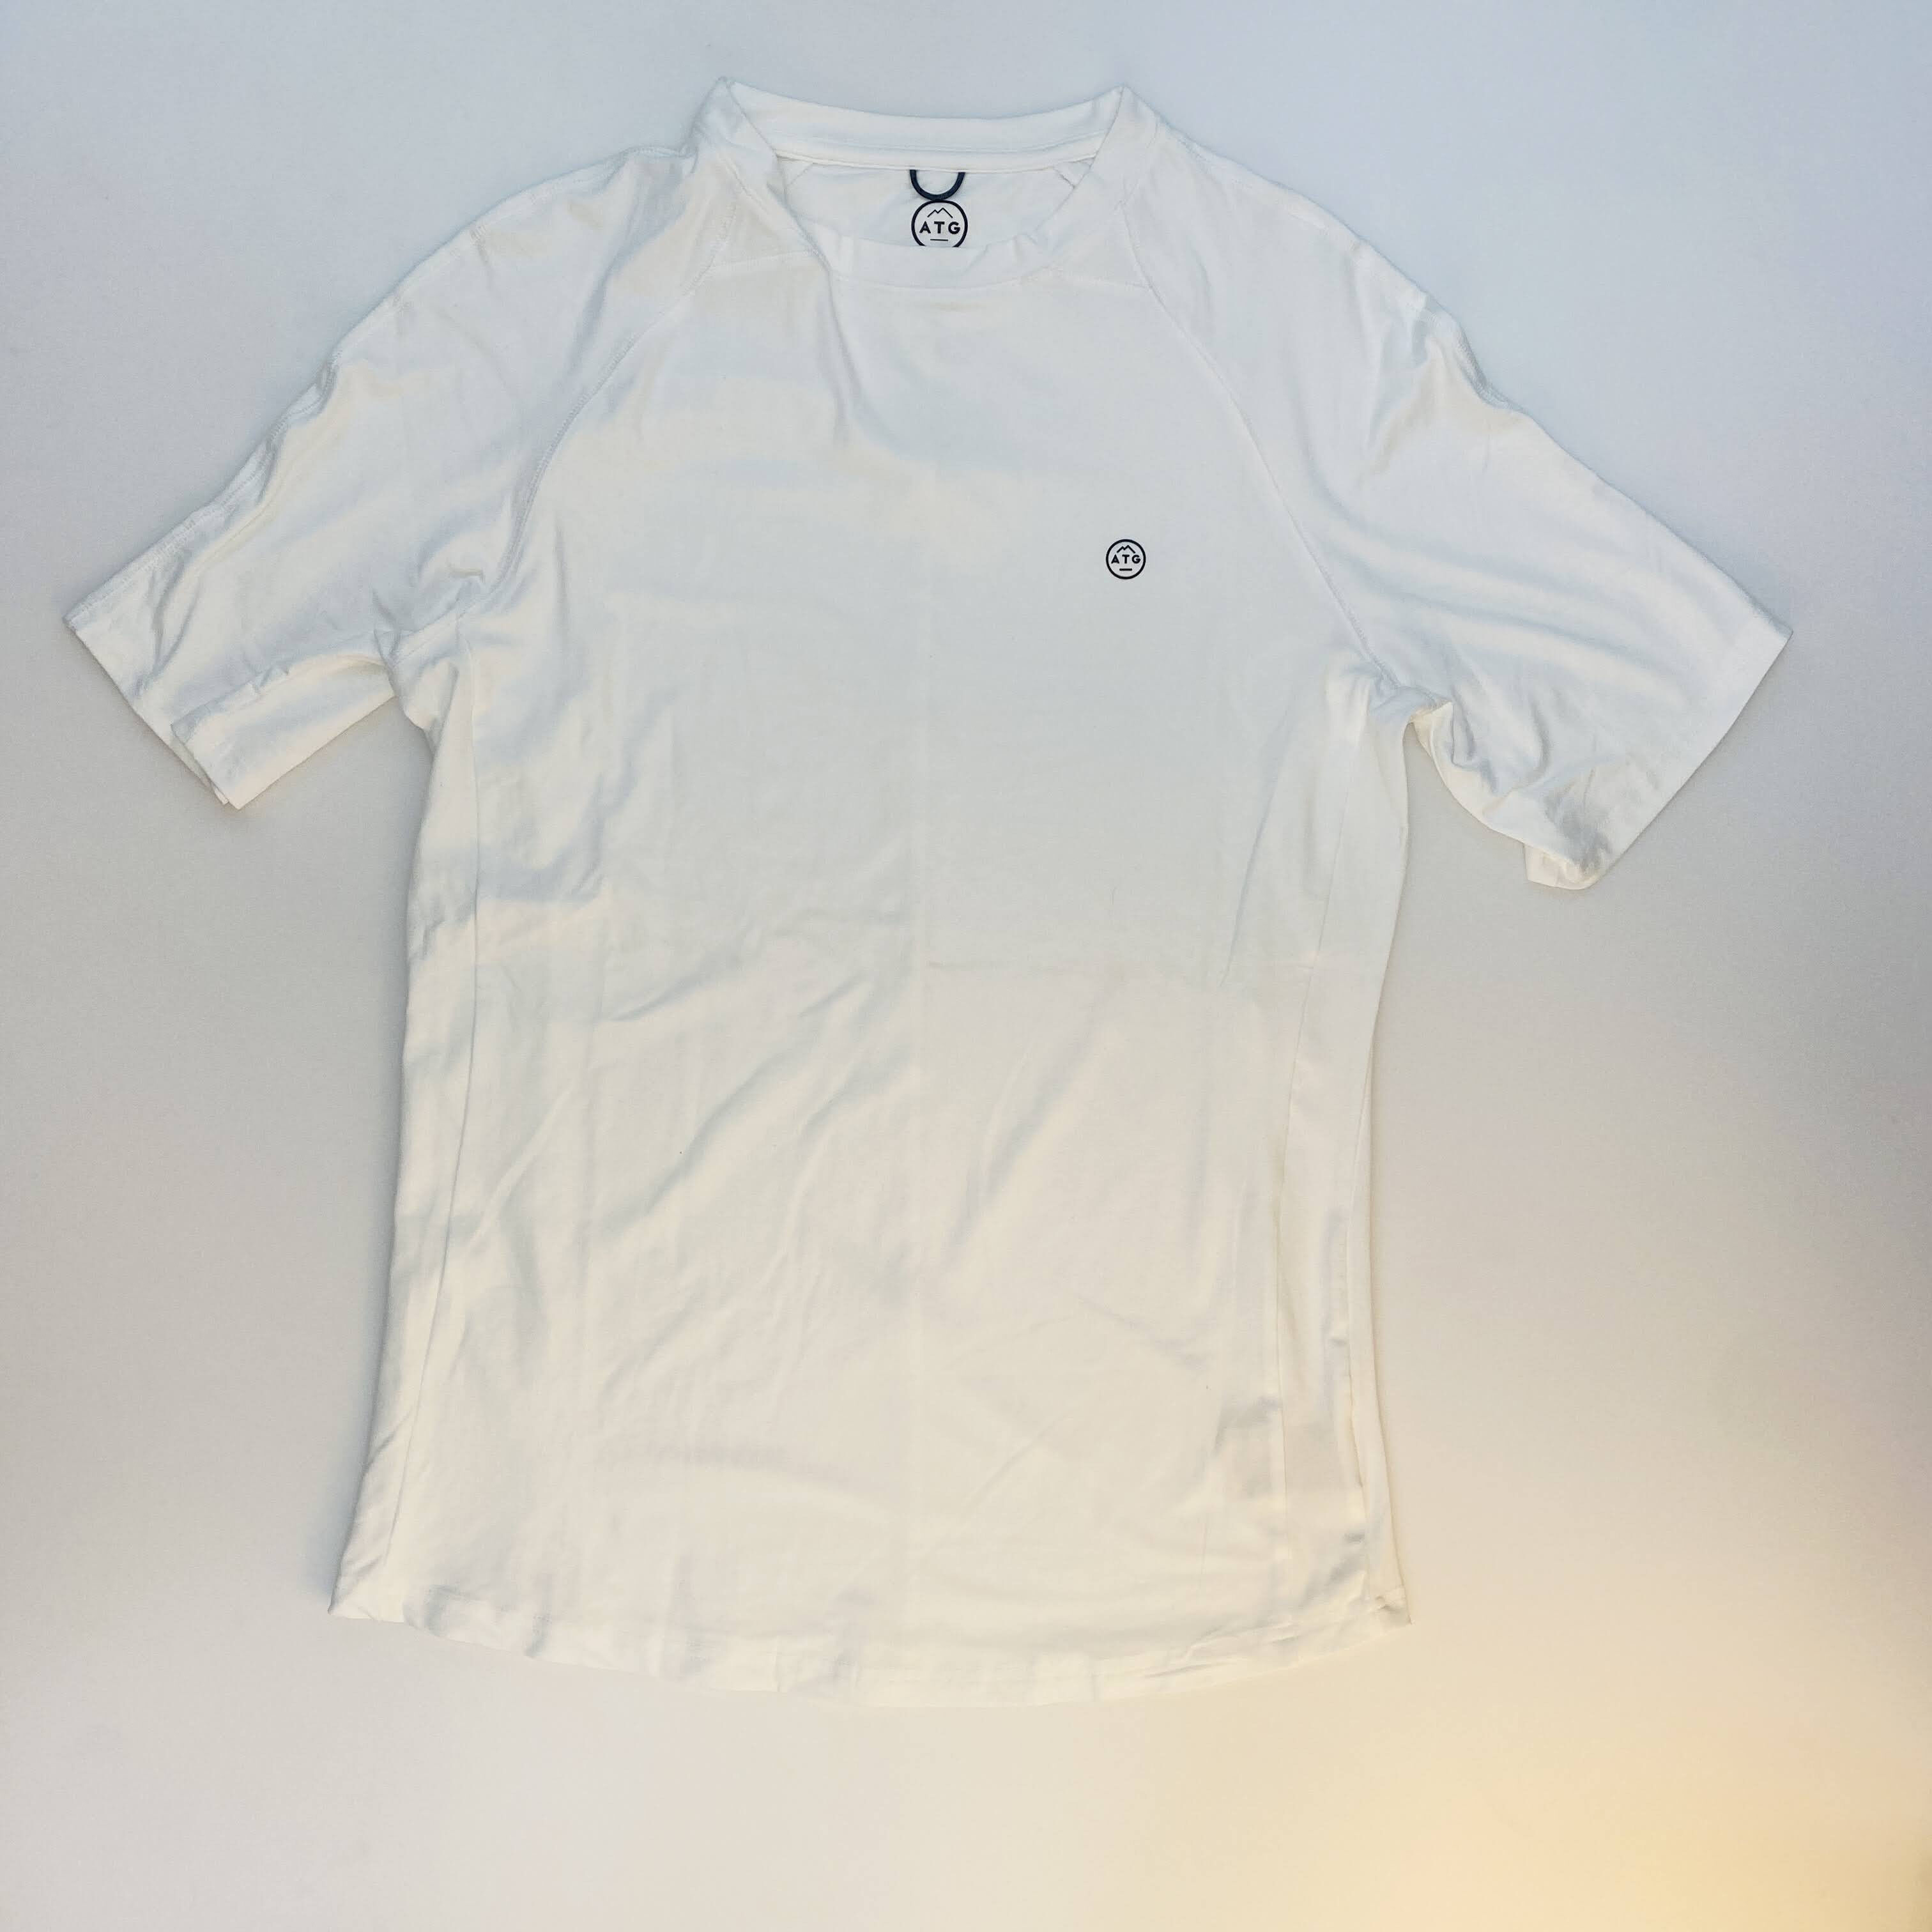 Wrangler Ss Performance T Shirt - T-shirt di seconda mano - Uomo - Bianco - M | Hardloop